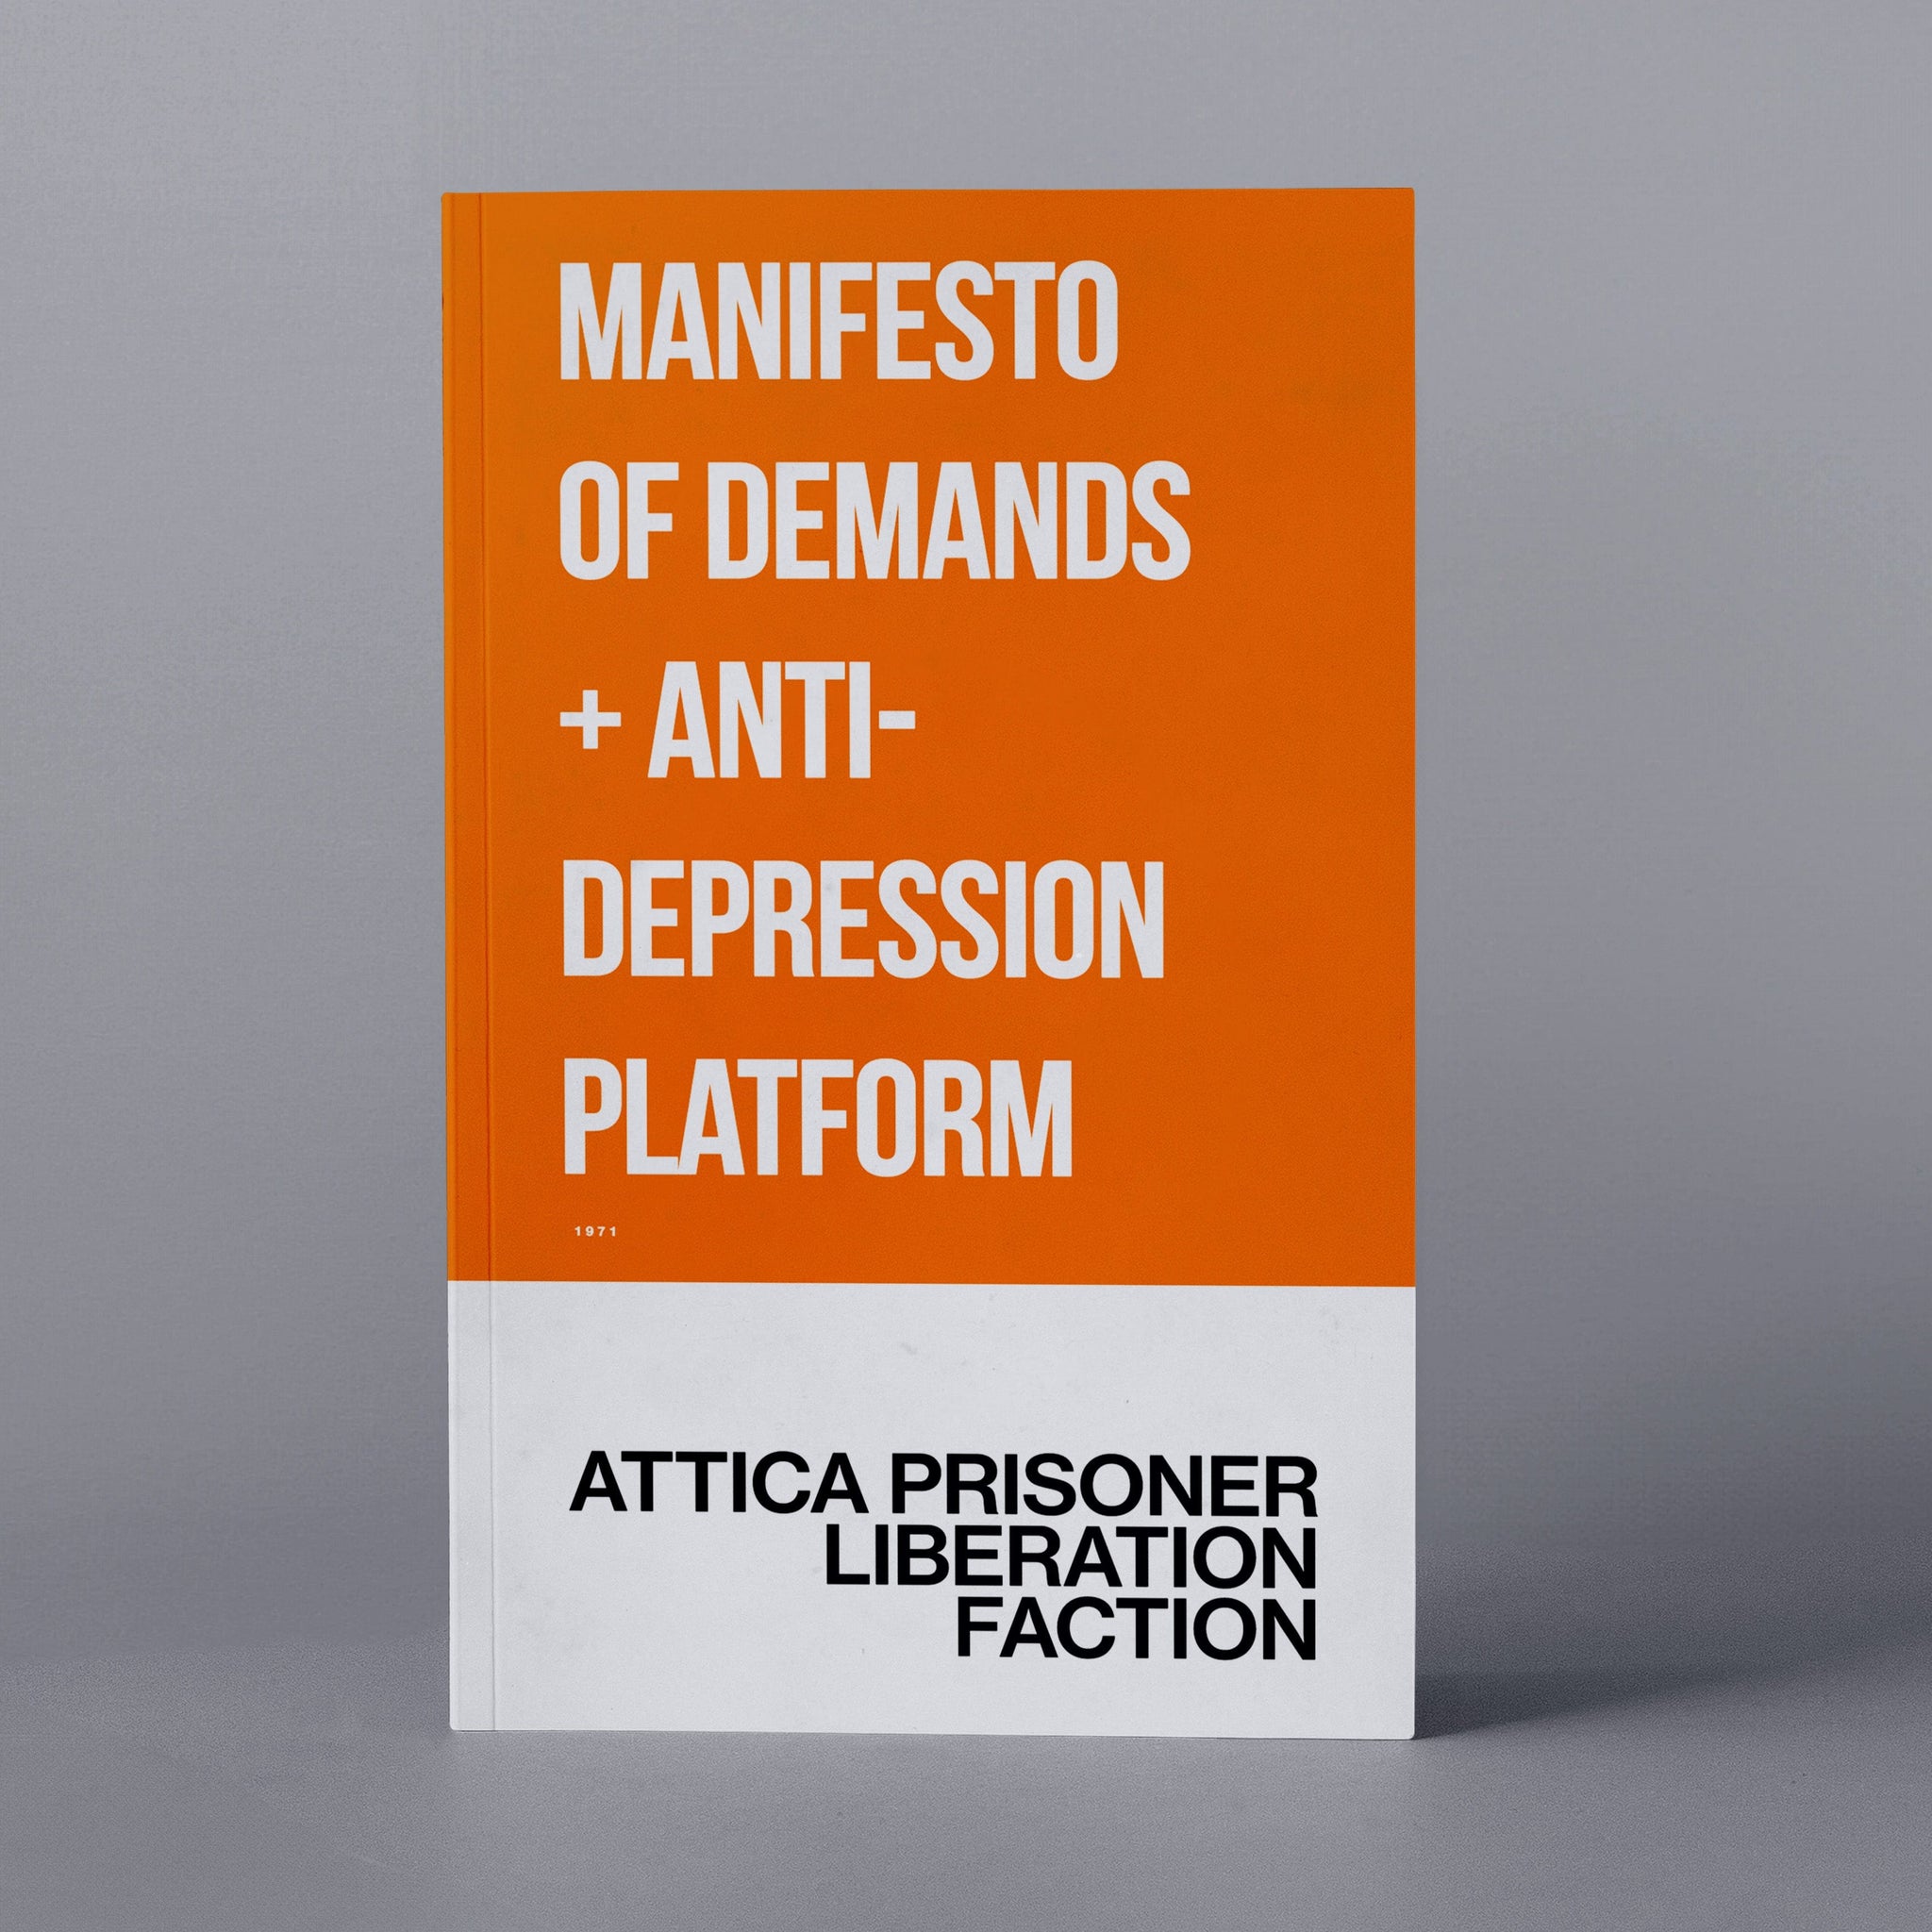 1971: Manifesto of Demands (Attica Liberation Faction)